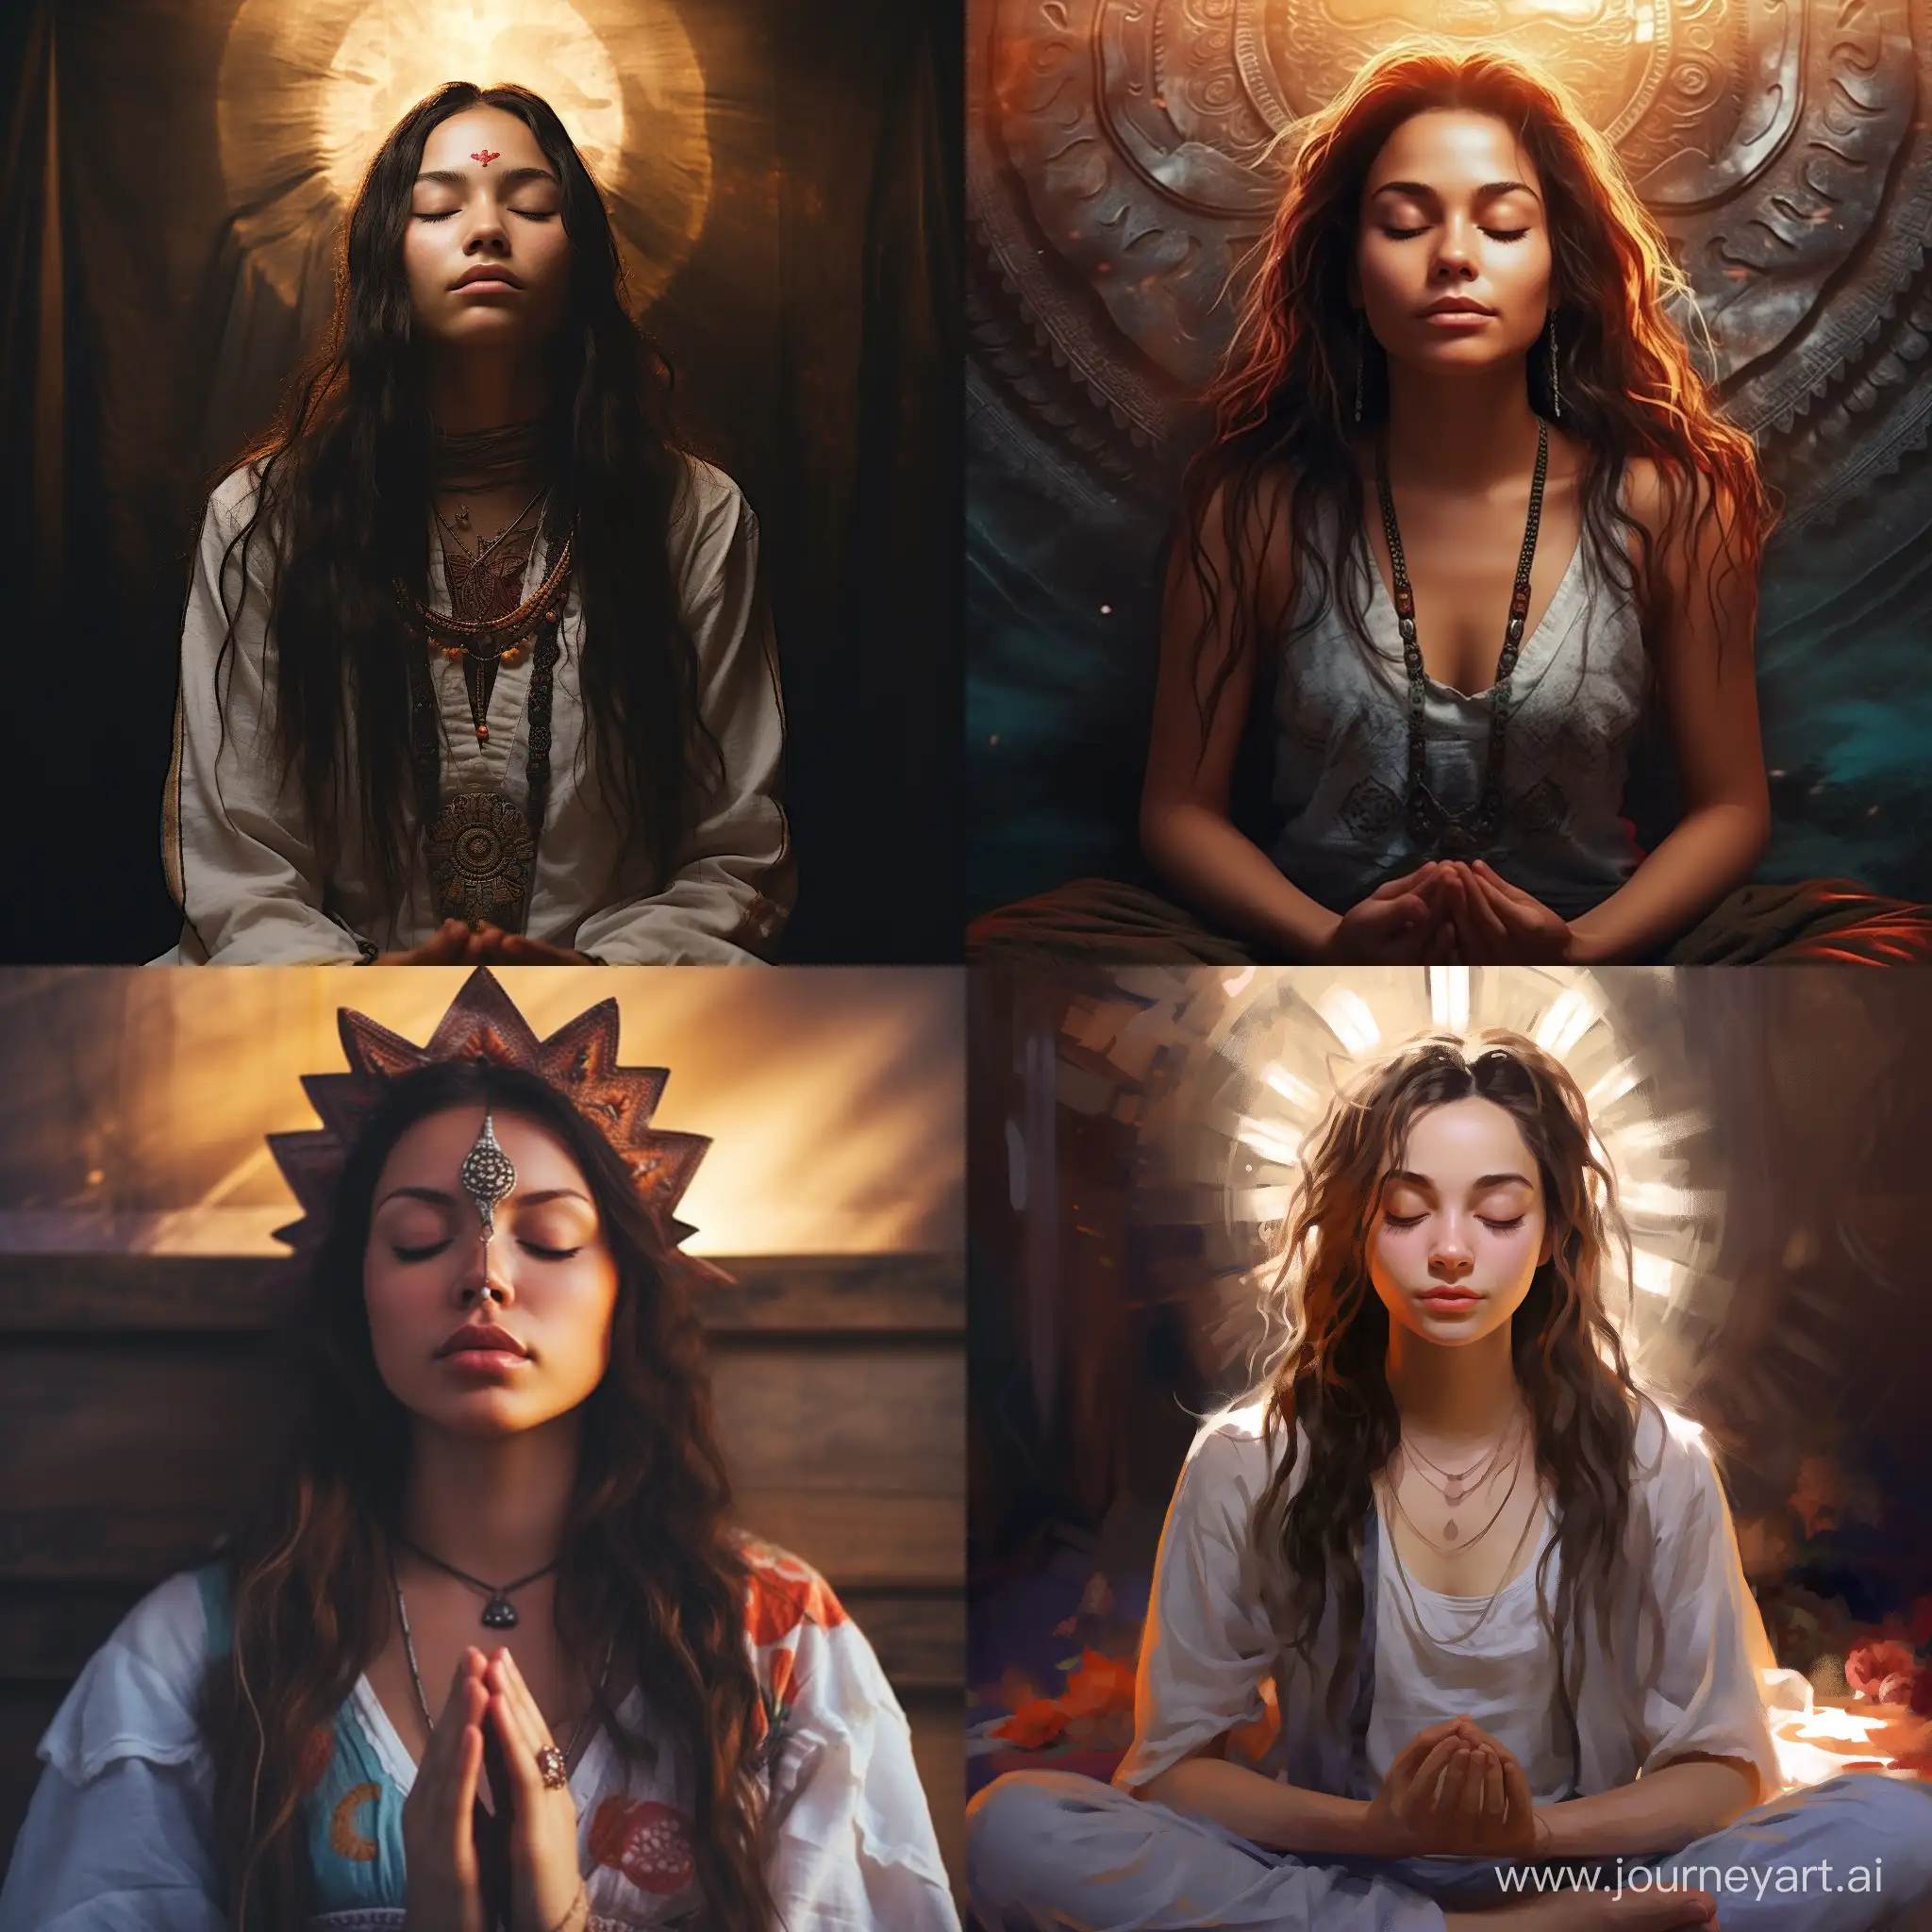 Emily a teenage spiritual shaman girl with her eyes closed in meditative prayer
